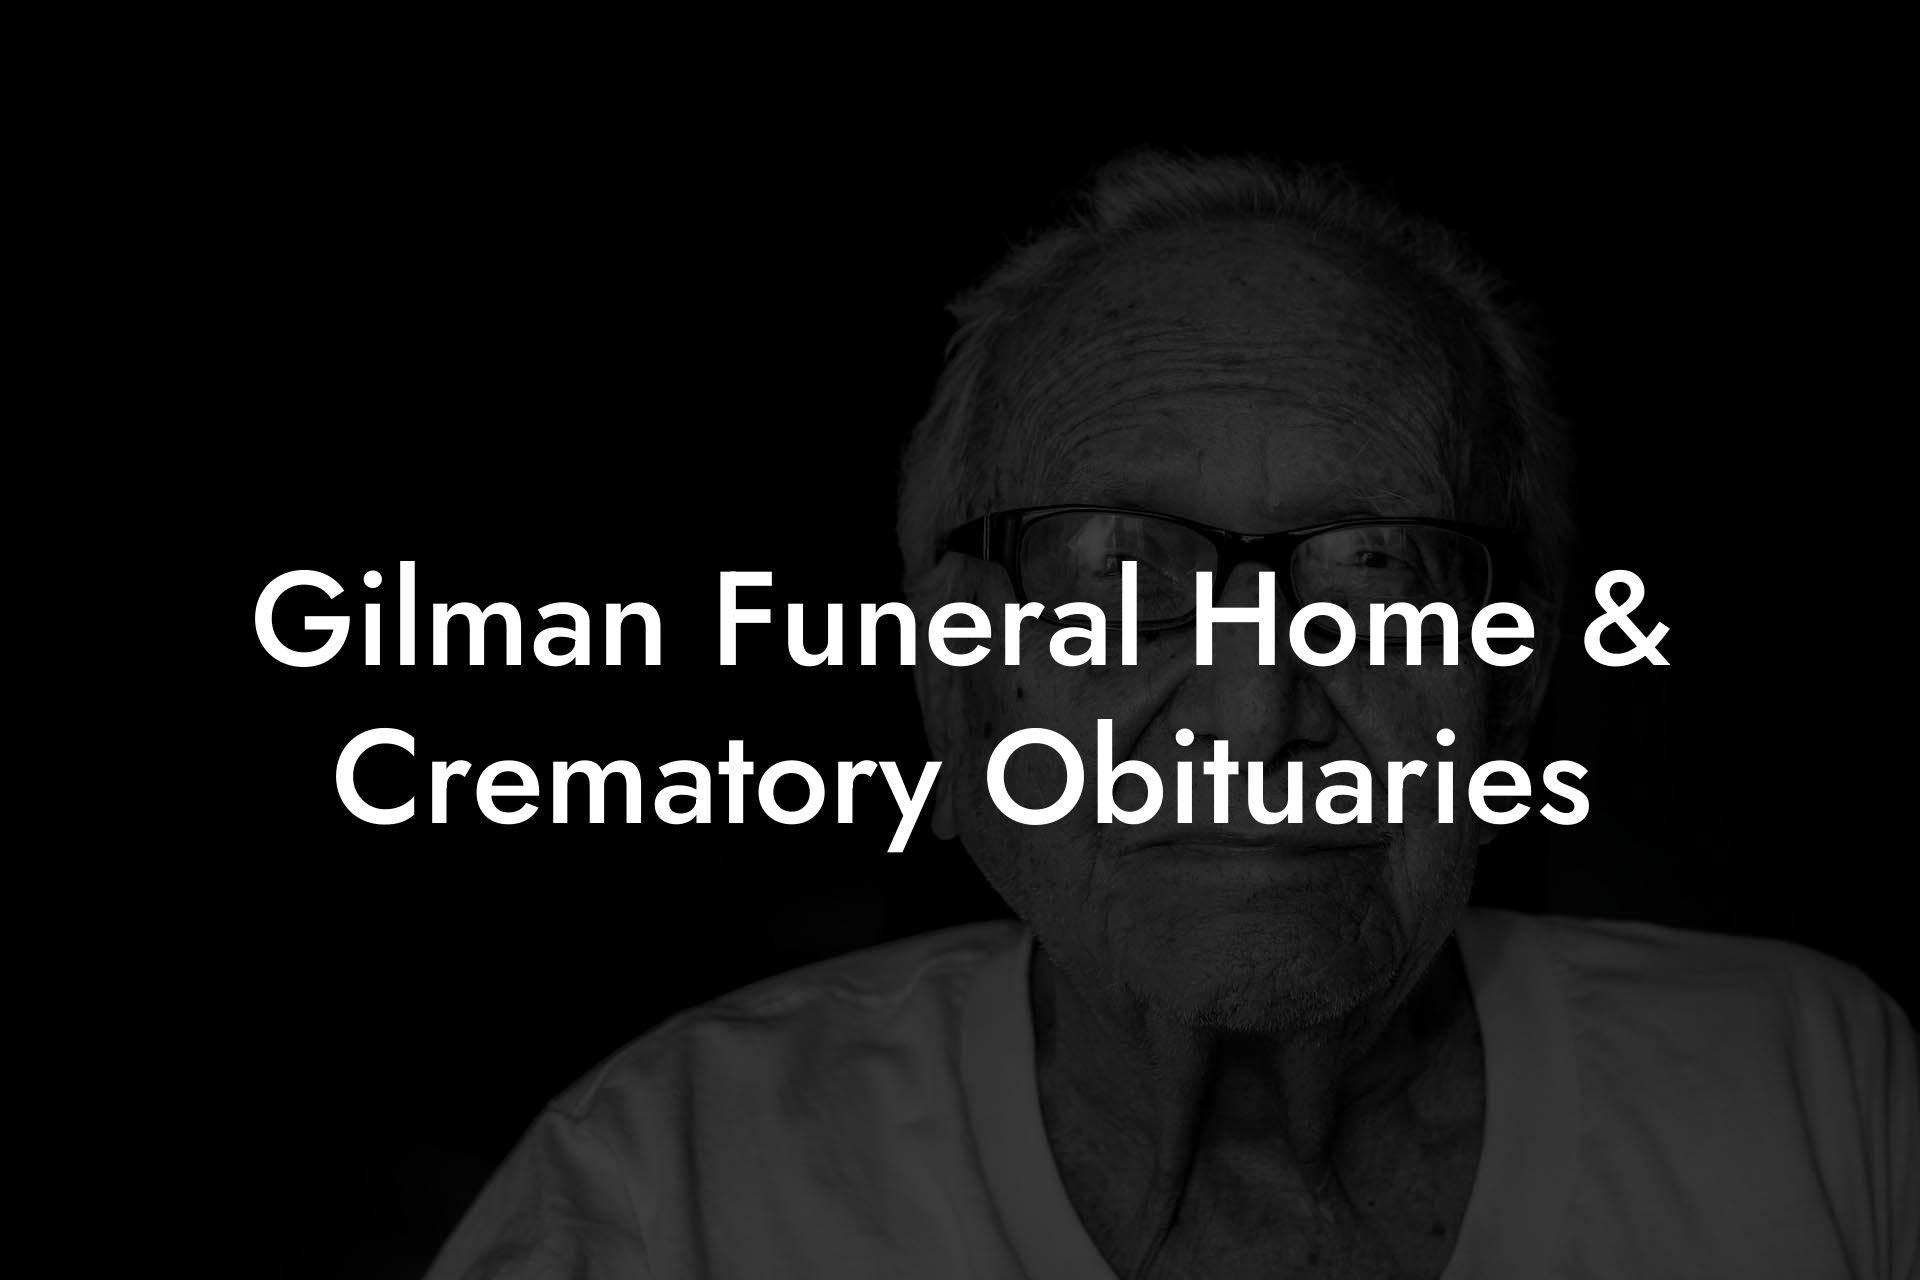 Gilman Funeral Home & Crematory Obituaries